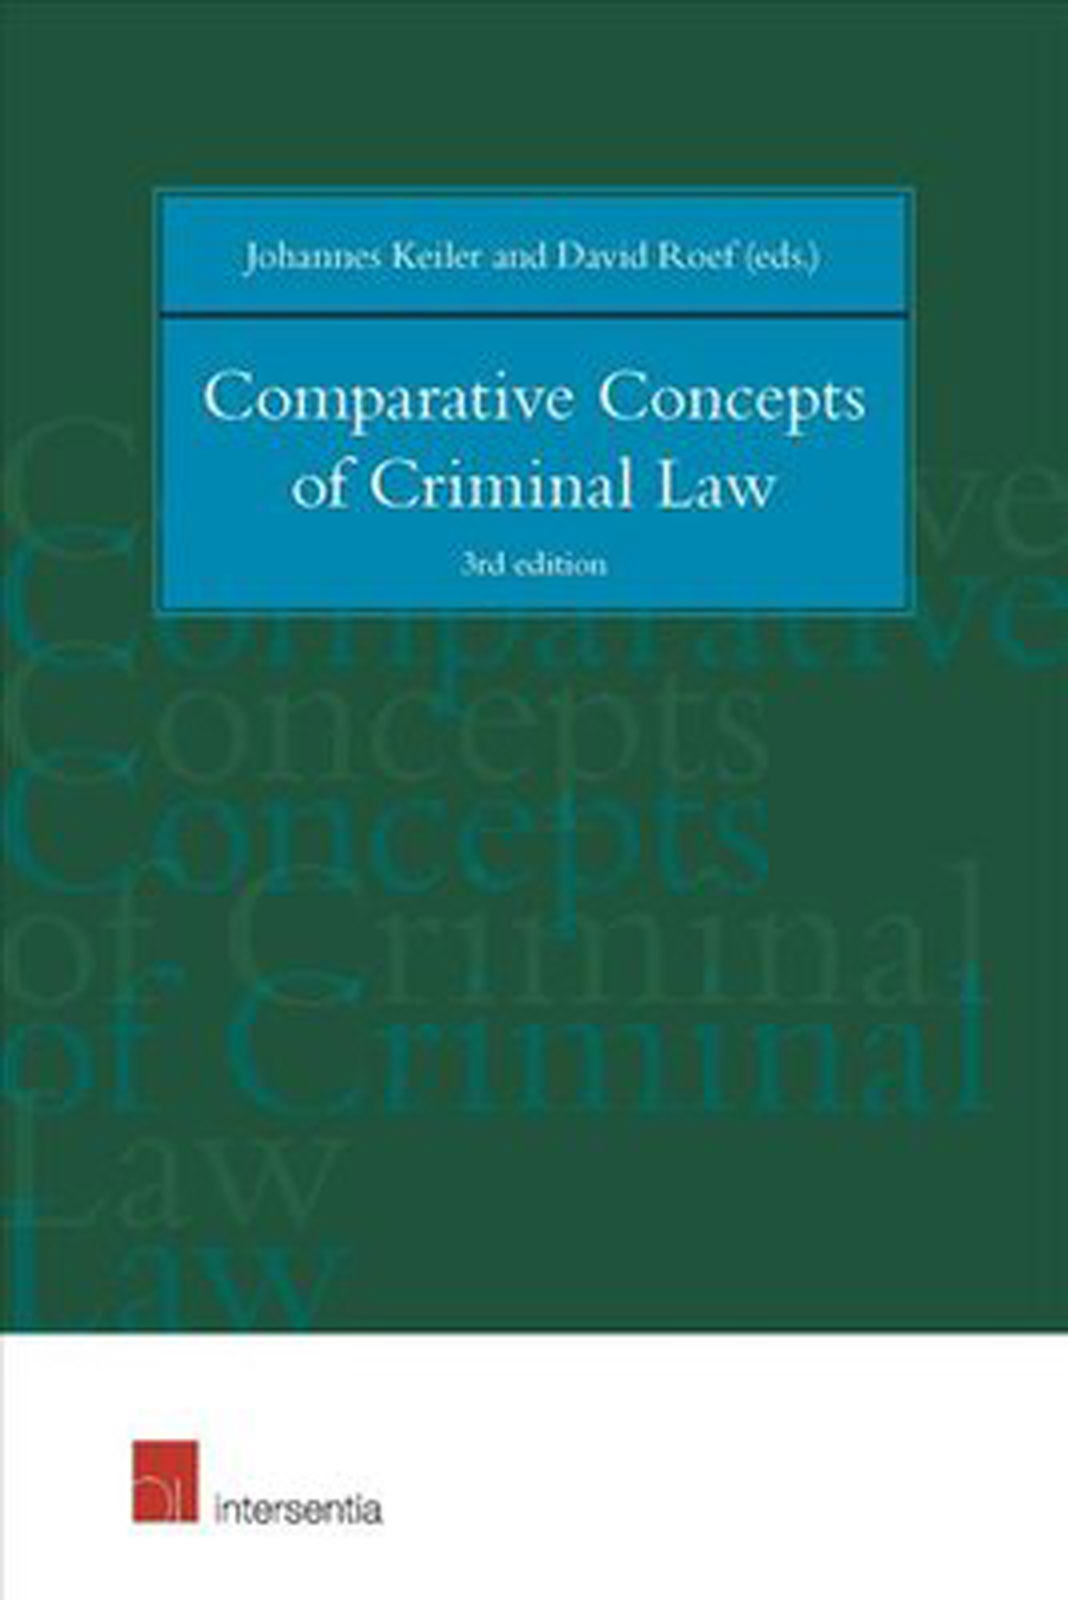 Comparitive Concepts of Criminal Law